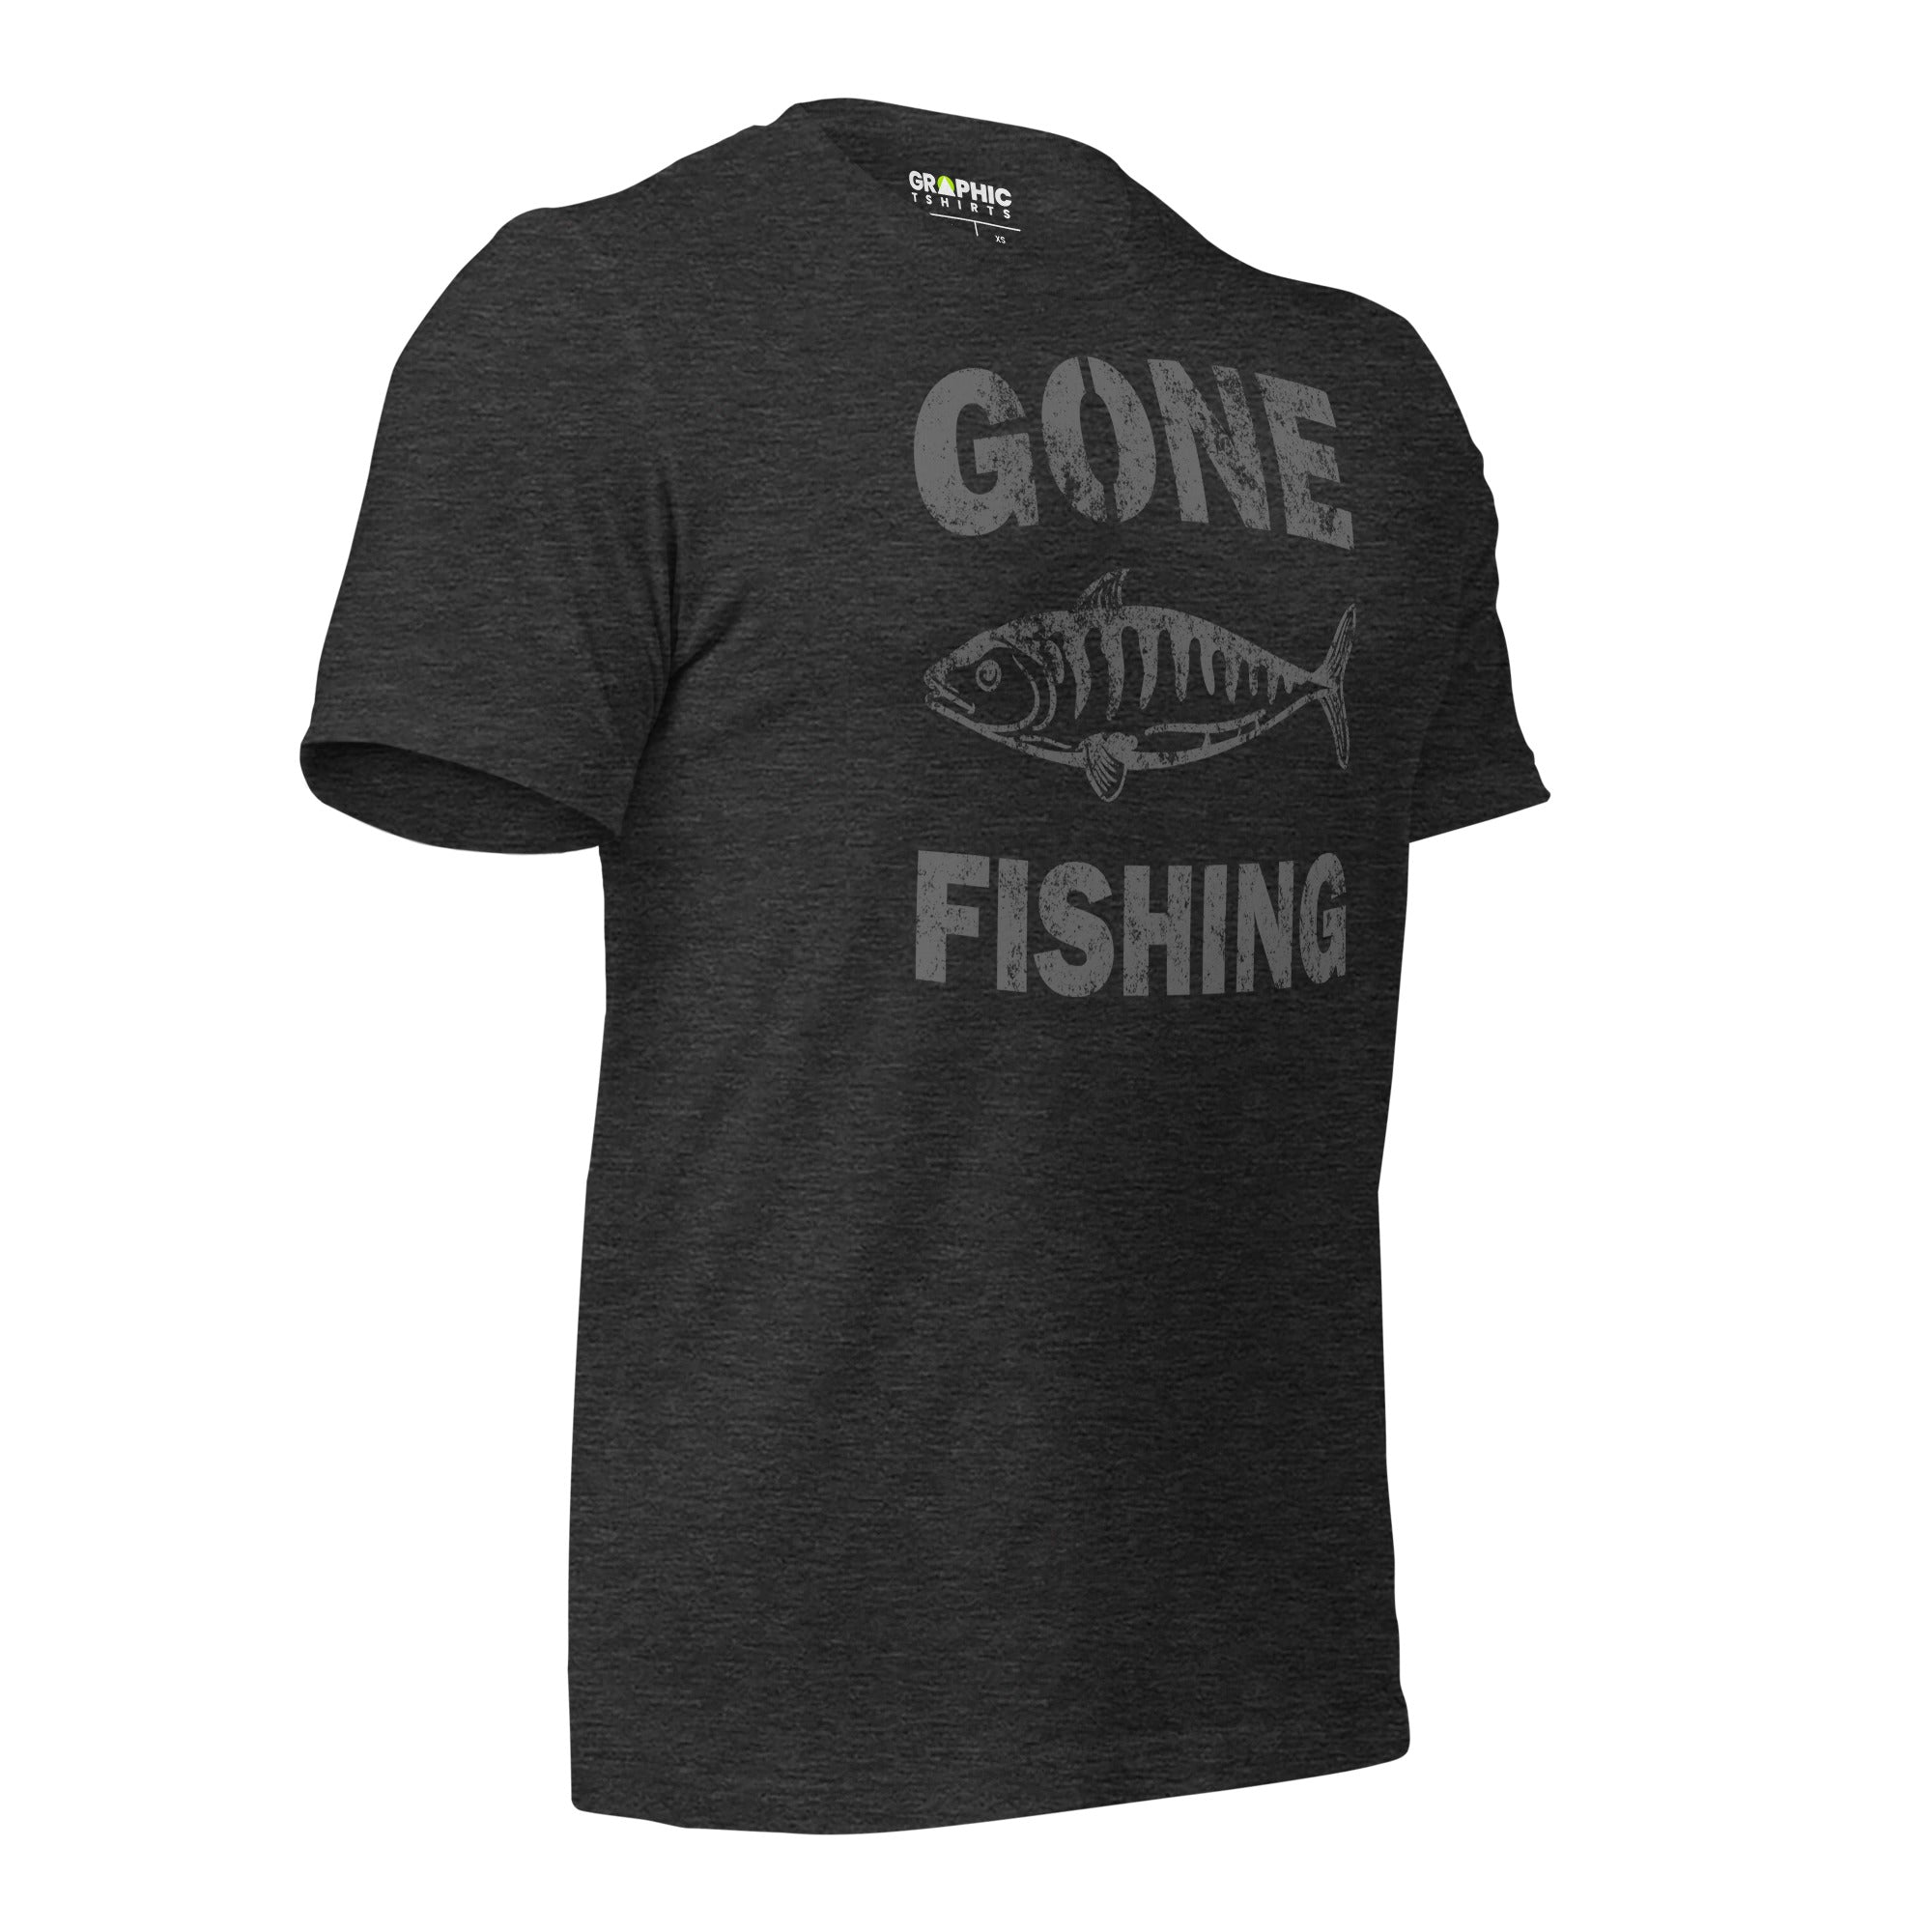 Unisex Staple T-Shirt - Gone Fishing - GRAPHIC T-SHIRTS